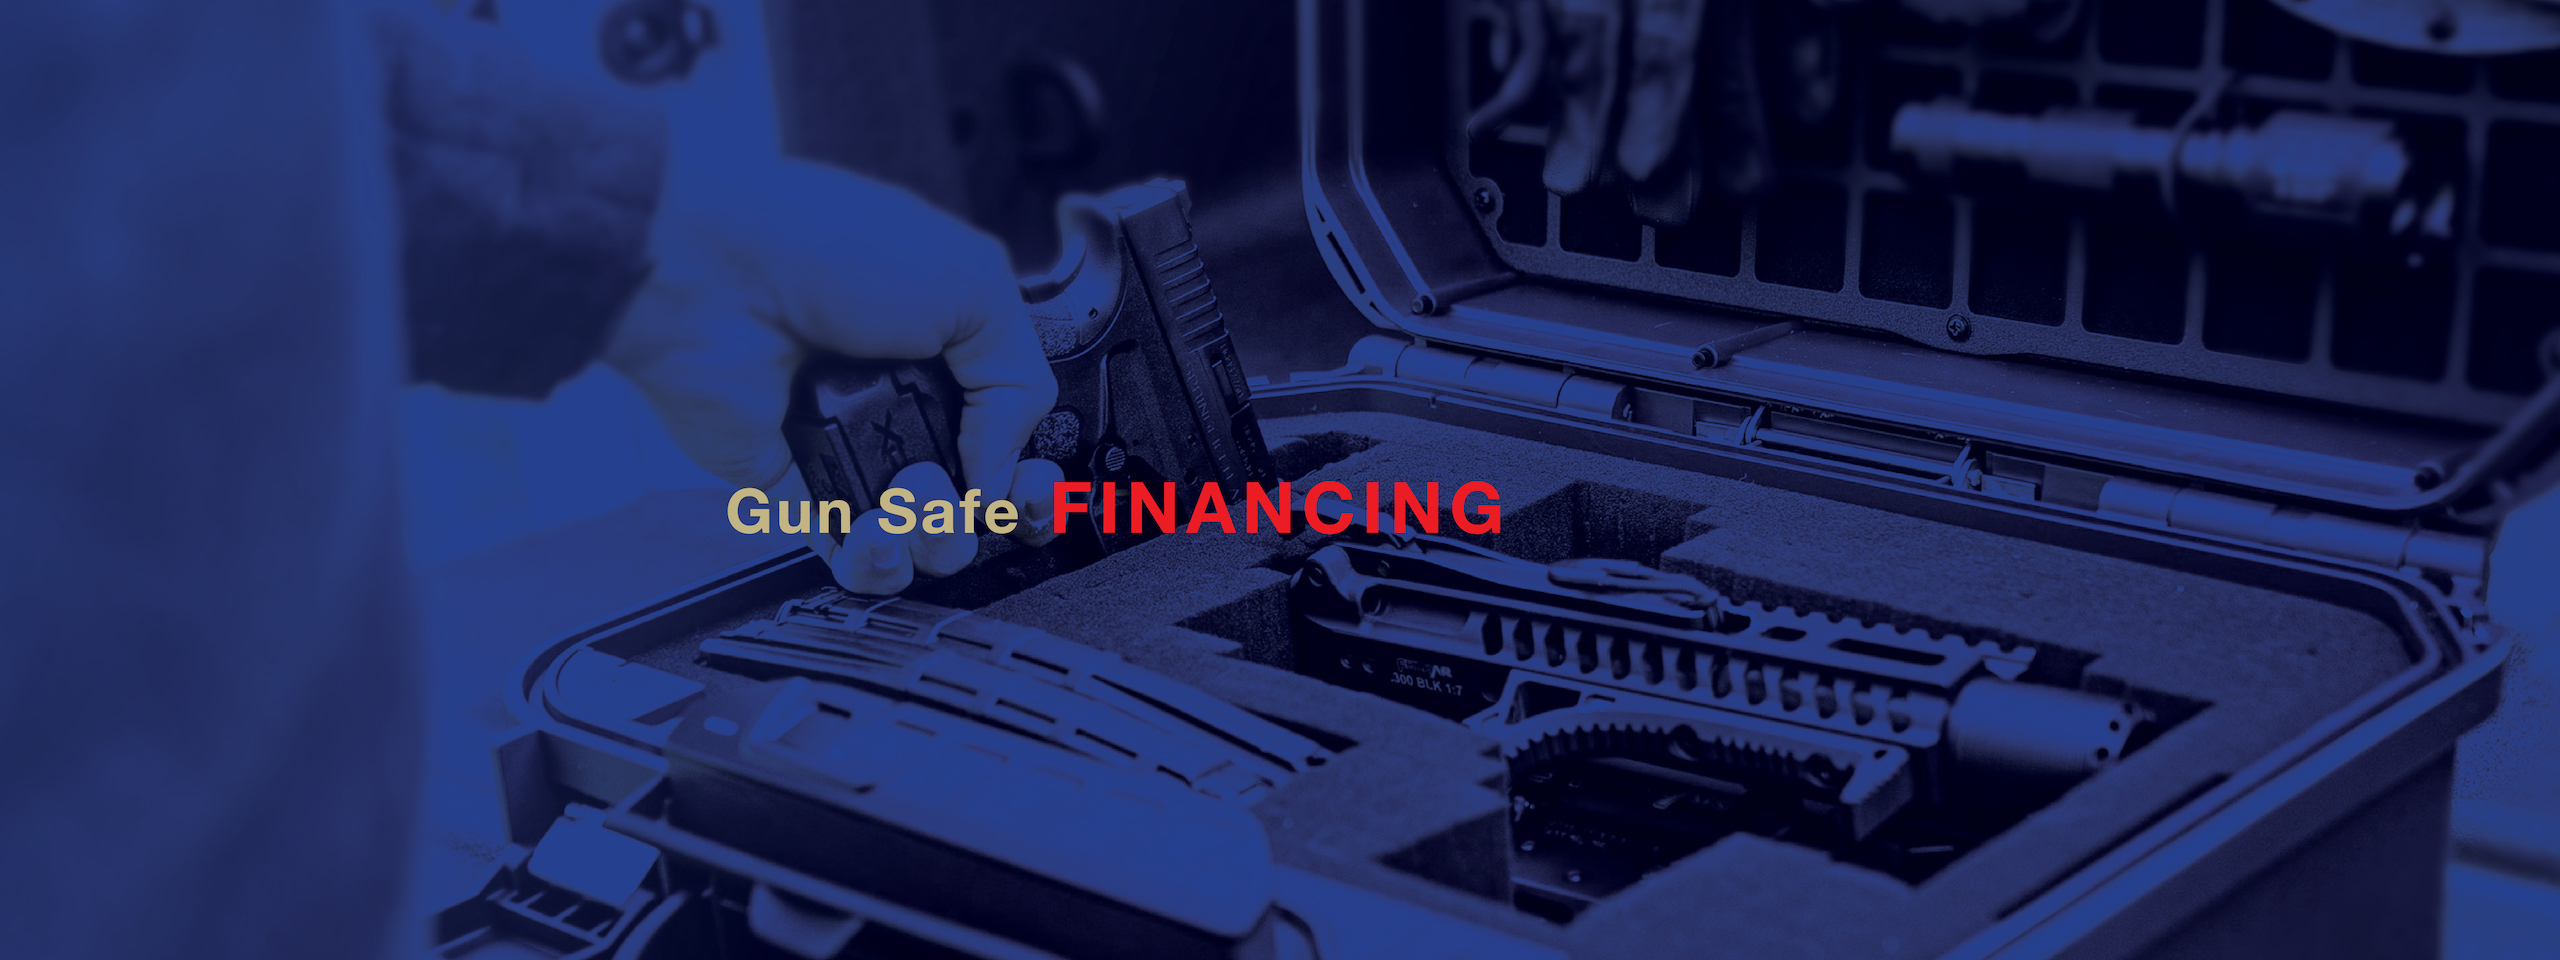 Gun Safe Financing Texas Safe and Vaults Austin TX